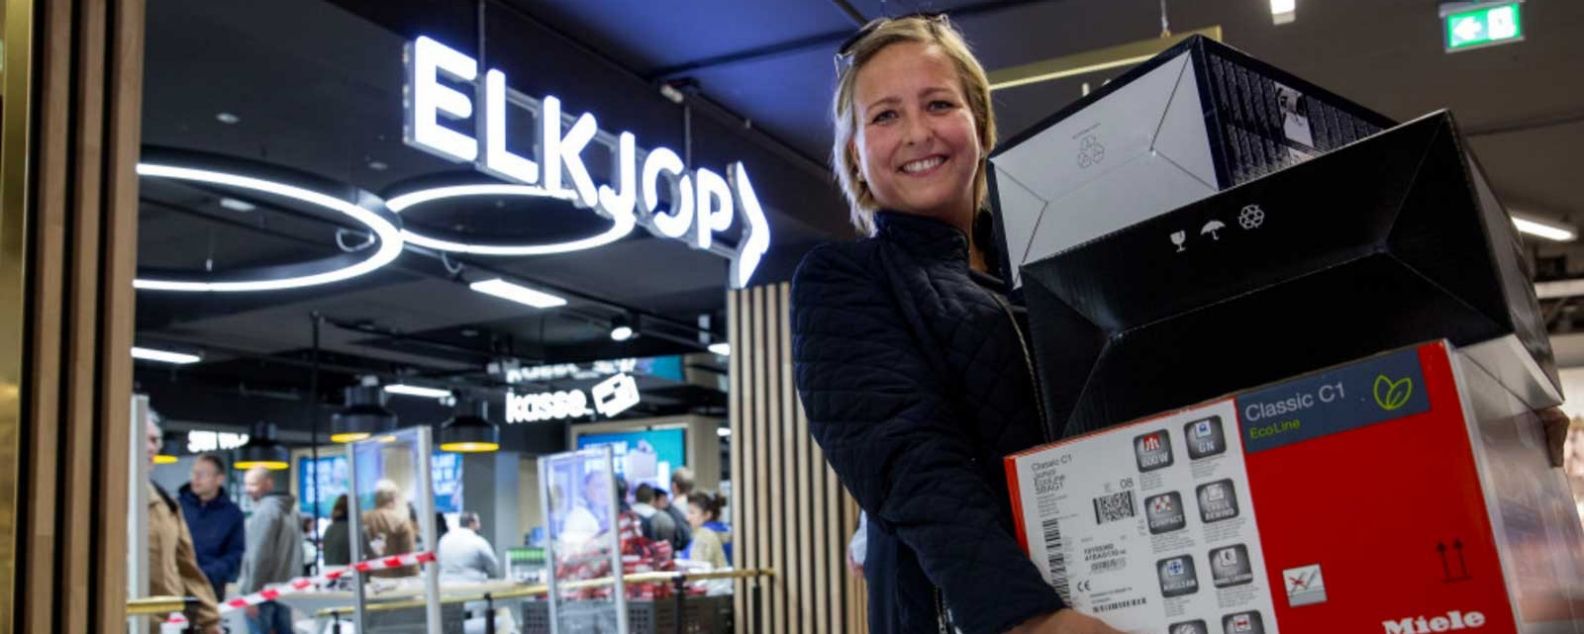 Woman shopping at Elkjøp